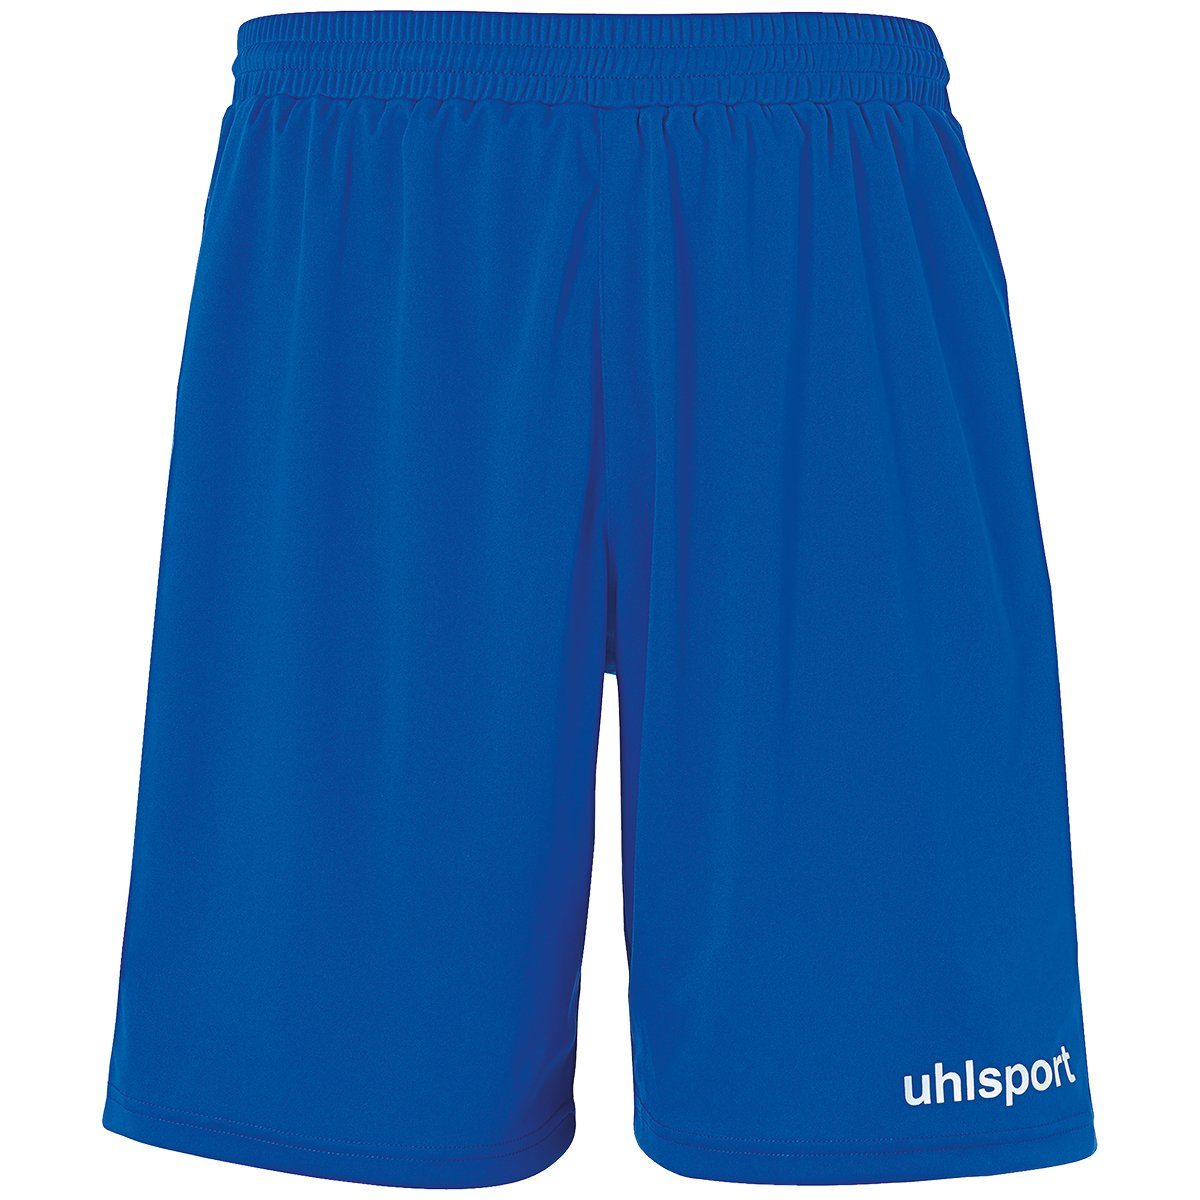 Garantierte Qualität uhlsport Shorts Shorts azurblau/weiß PERFORMANCE SHORTS uhlsport